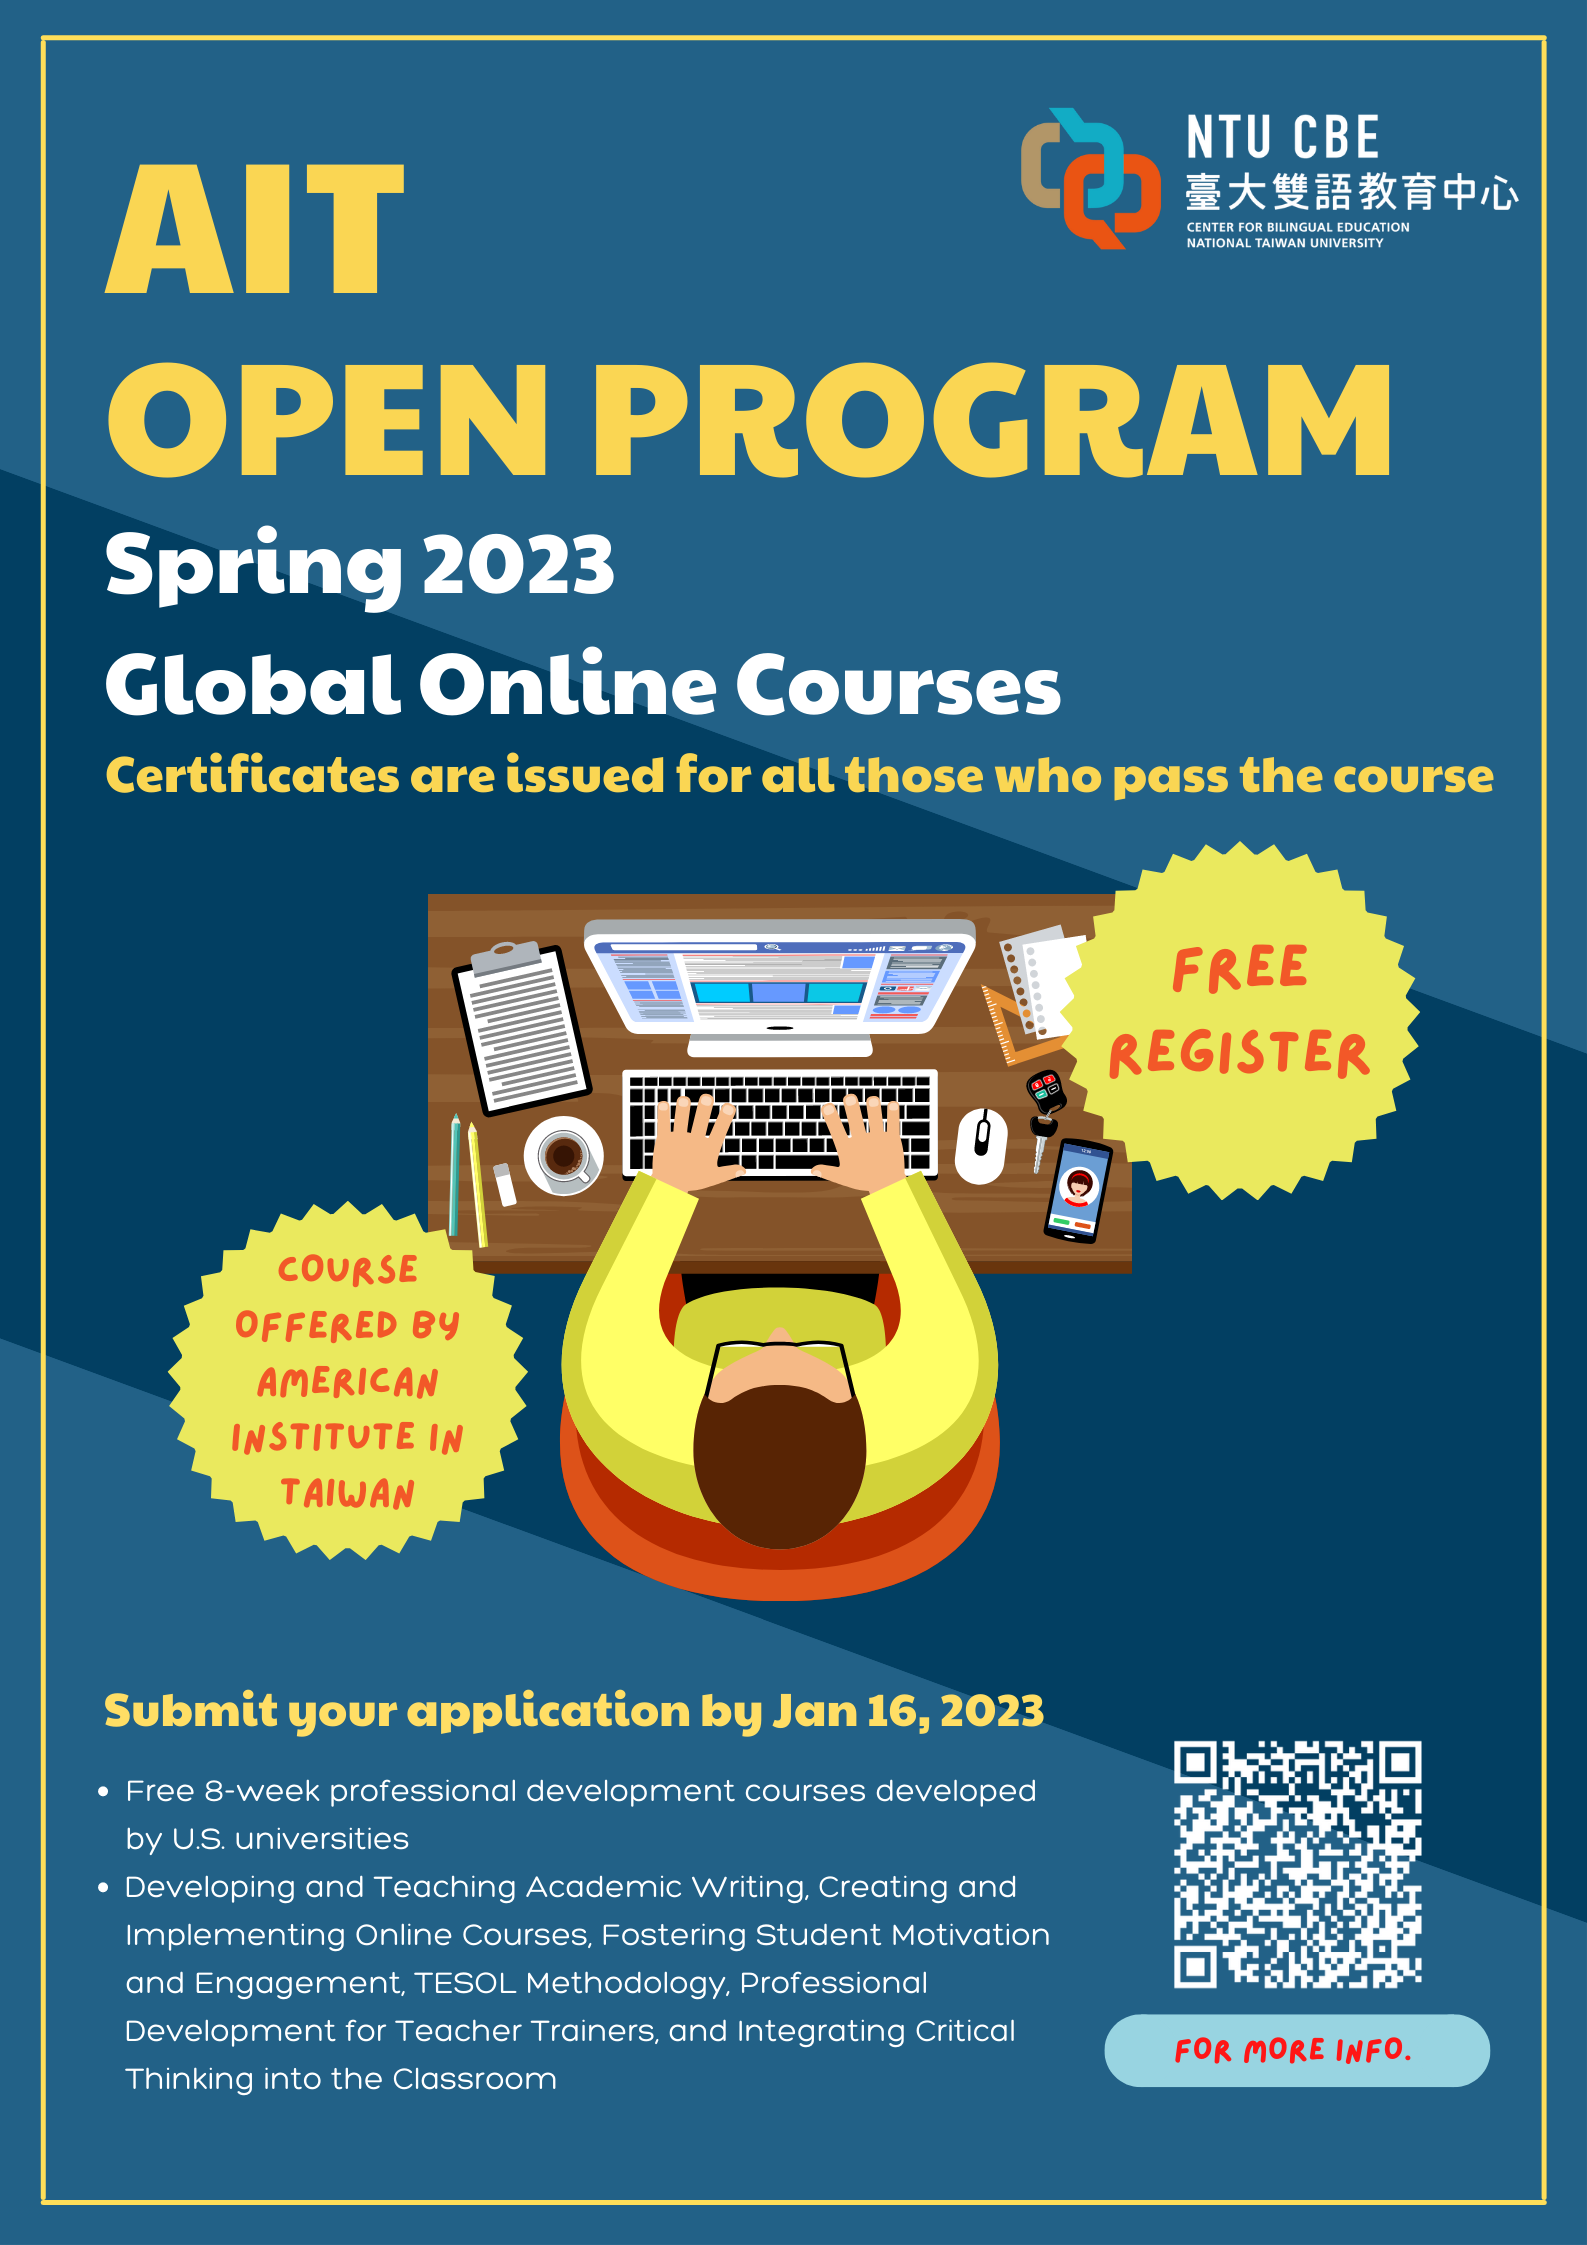 AIT OPEN PROGRAM: Spring 2023 Global Online Courses